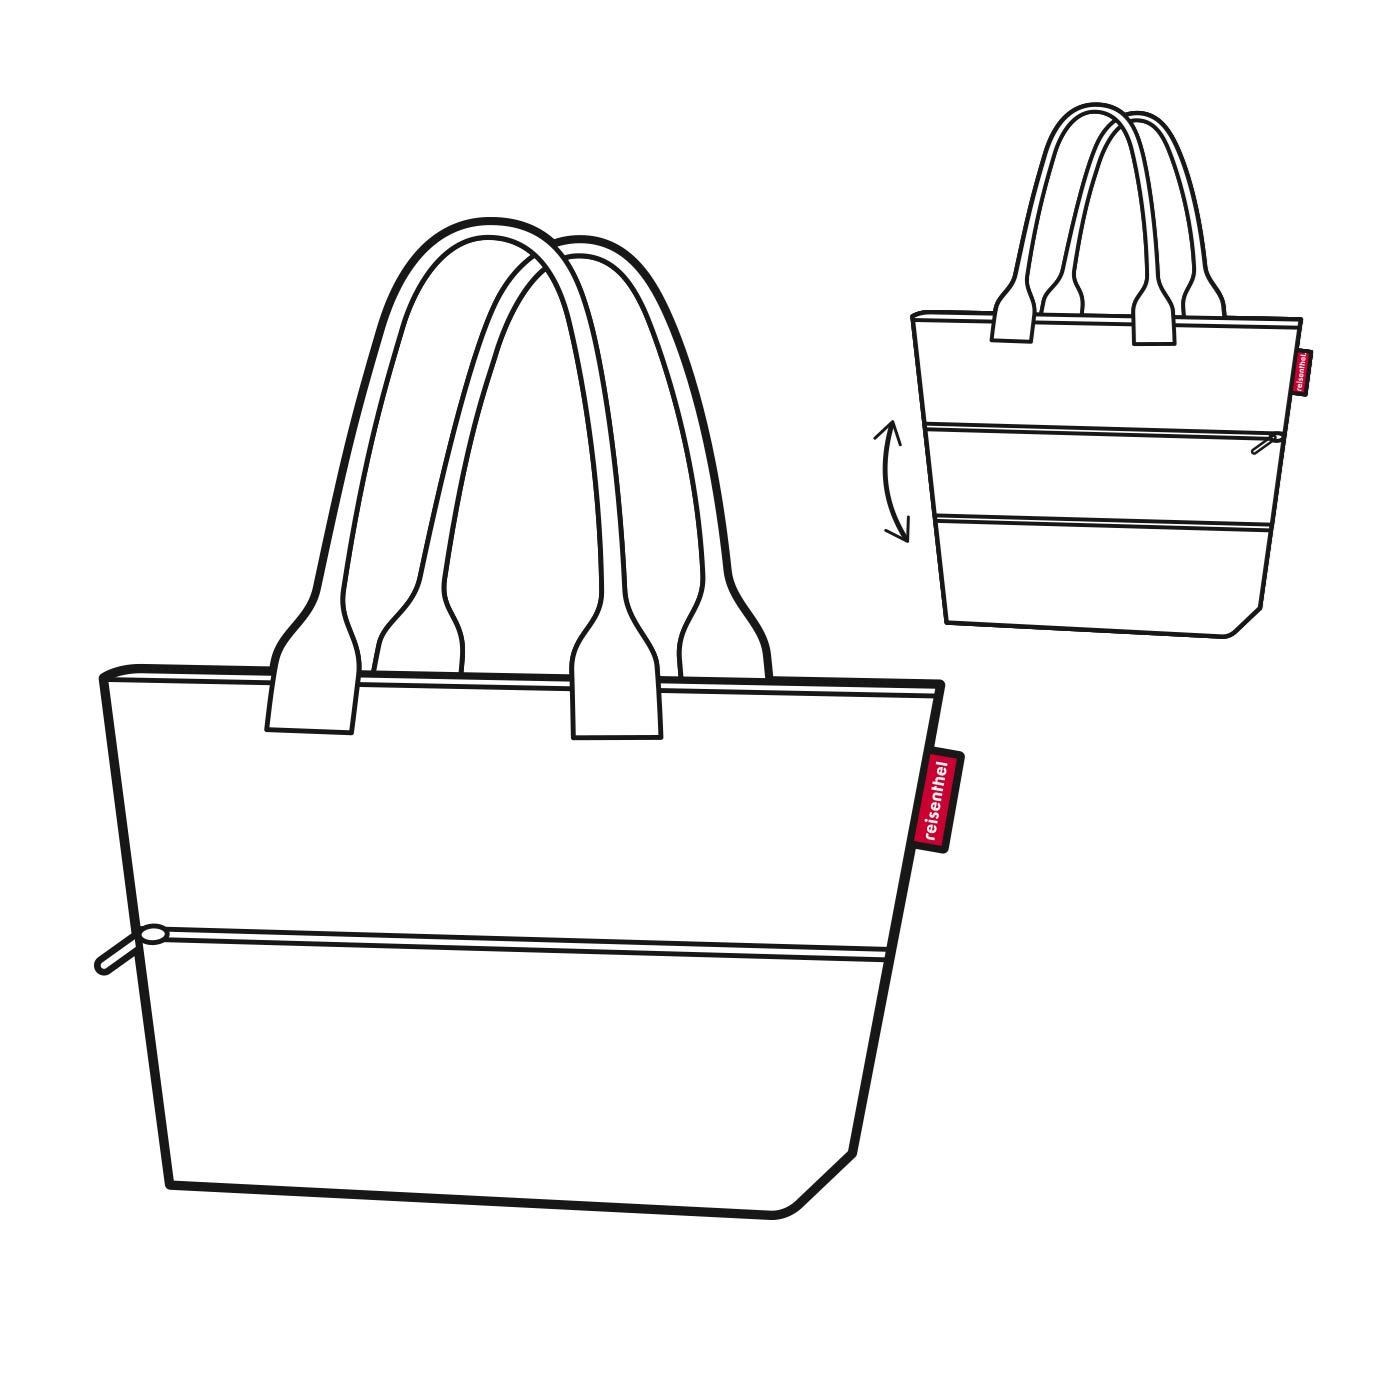 Chytrá taška přes rameno Shopper e1 twist azure_4